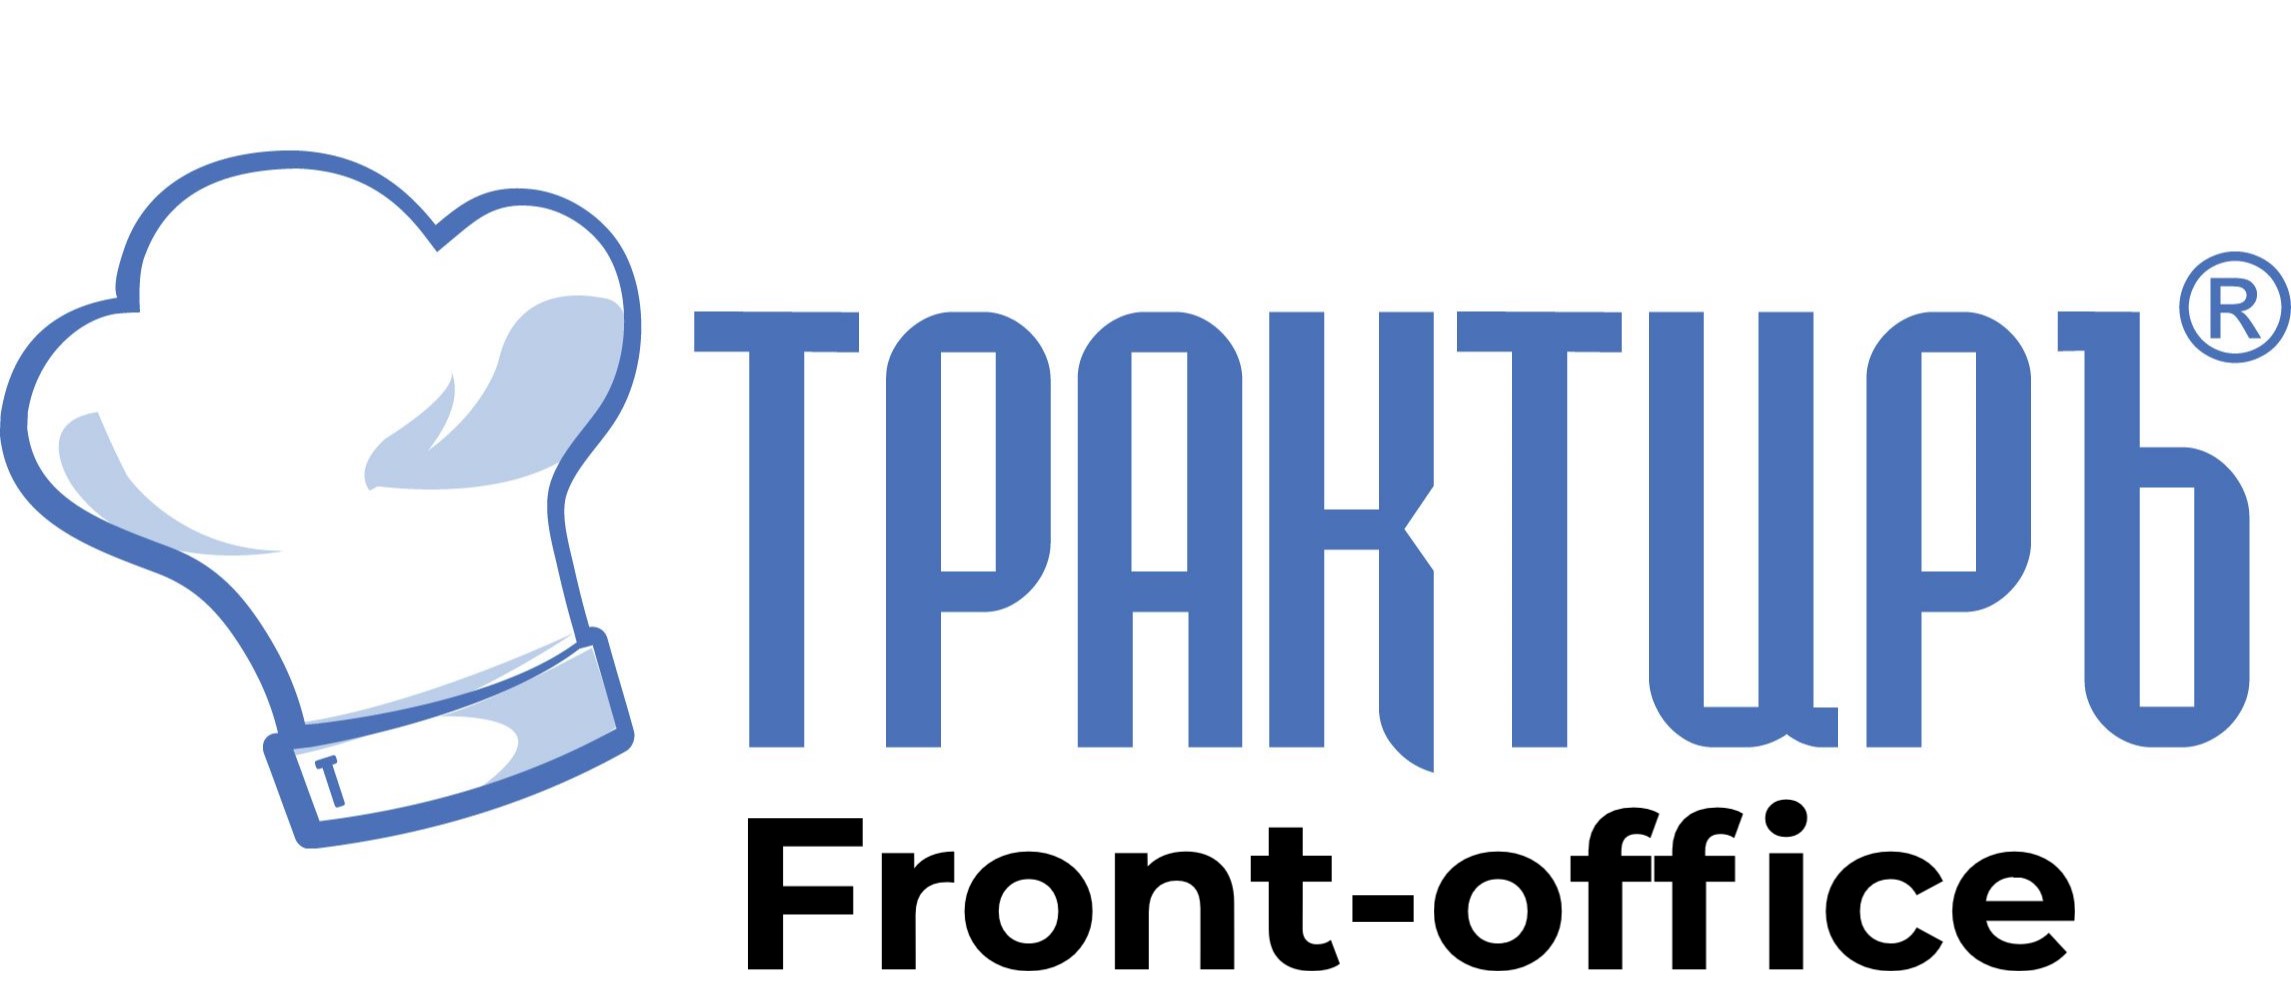 Трактиръ: Front-Office v4.5  Основная поставка в Магнитогорске